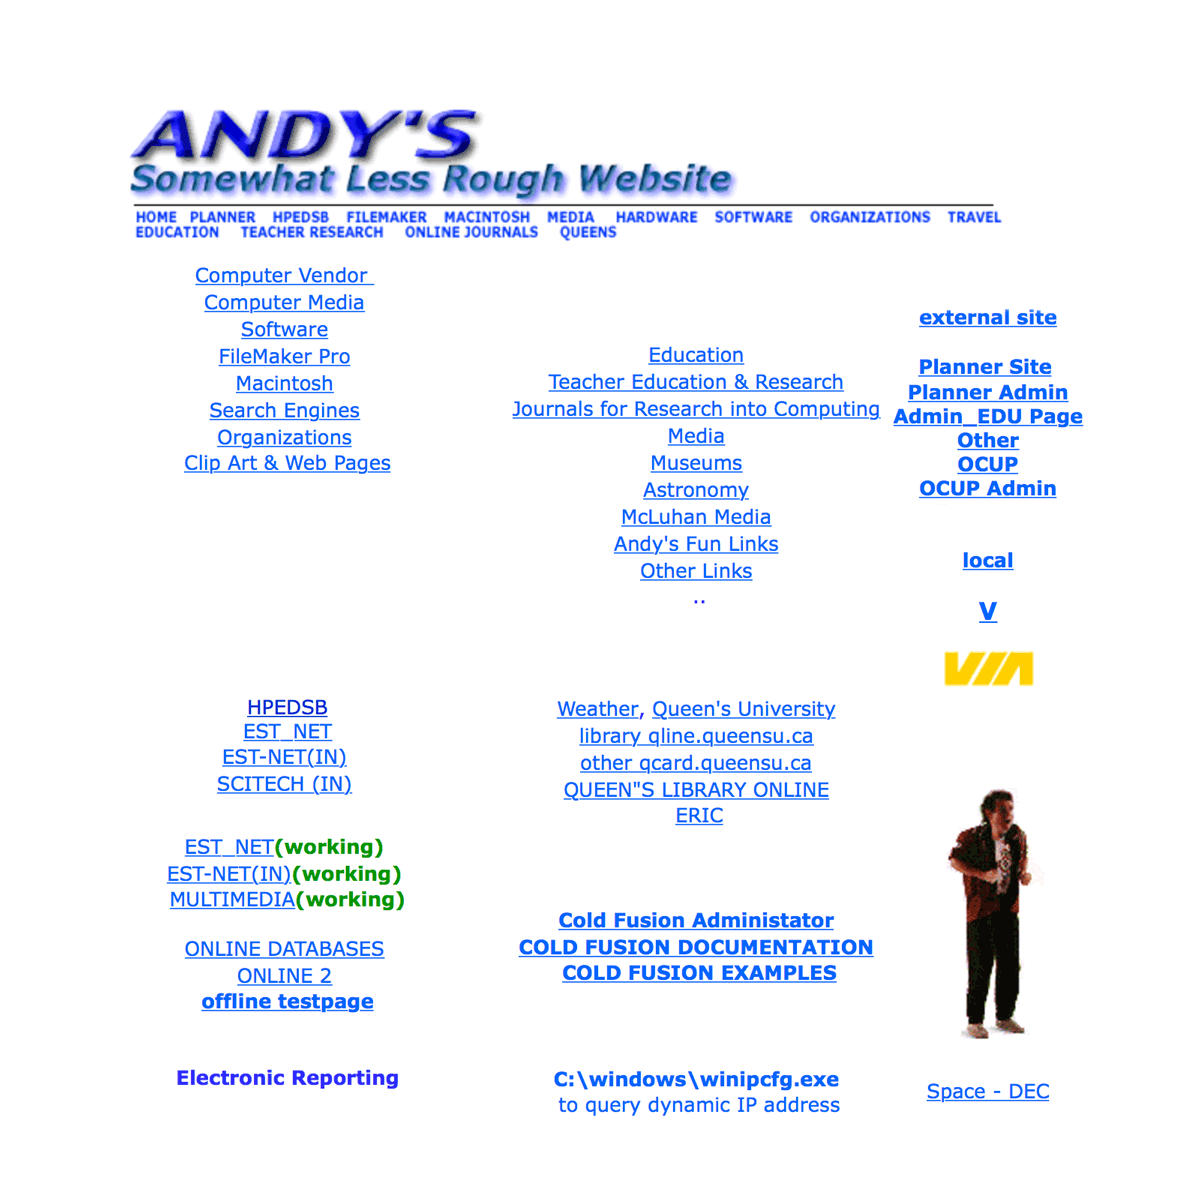 Andy'sSomewhatLessRoughWebsite